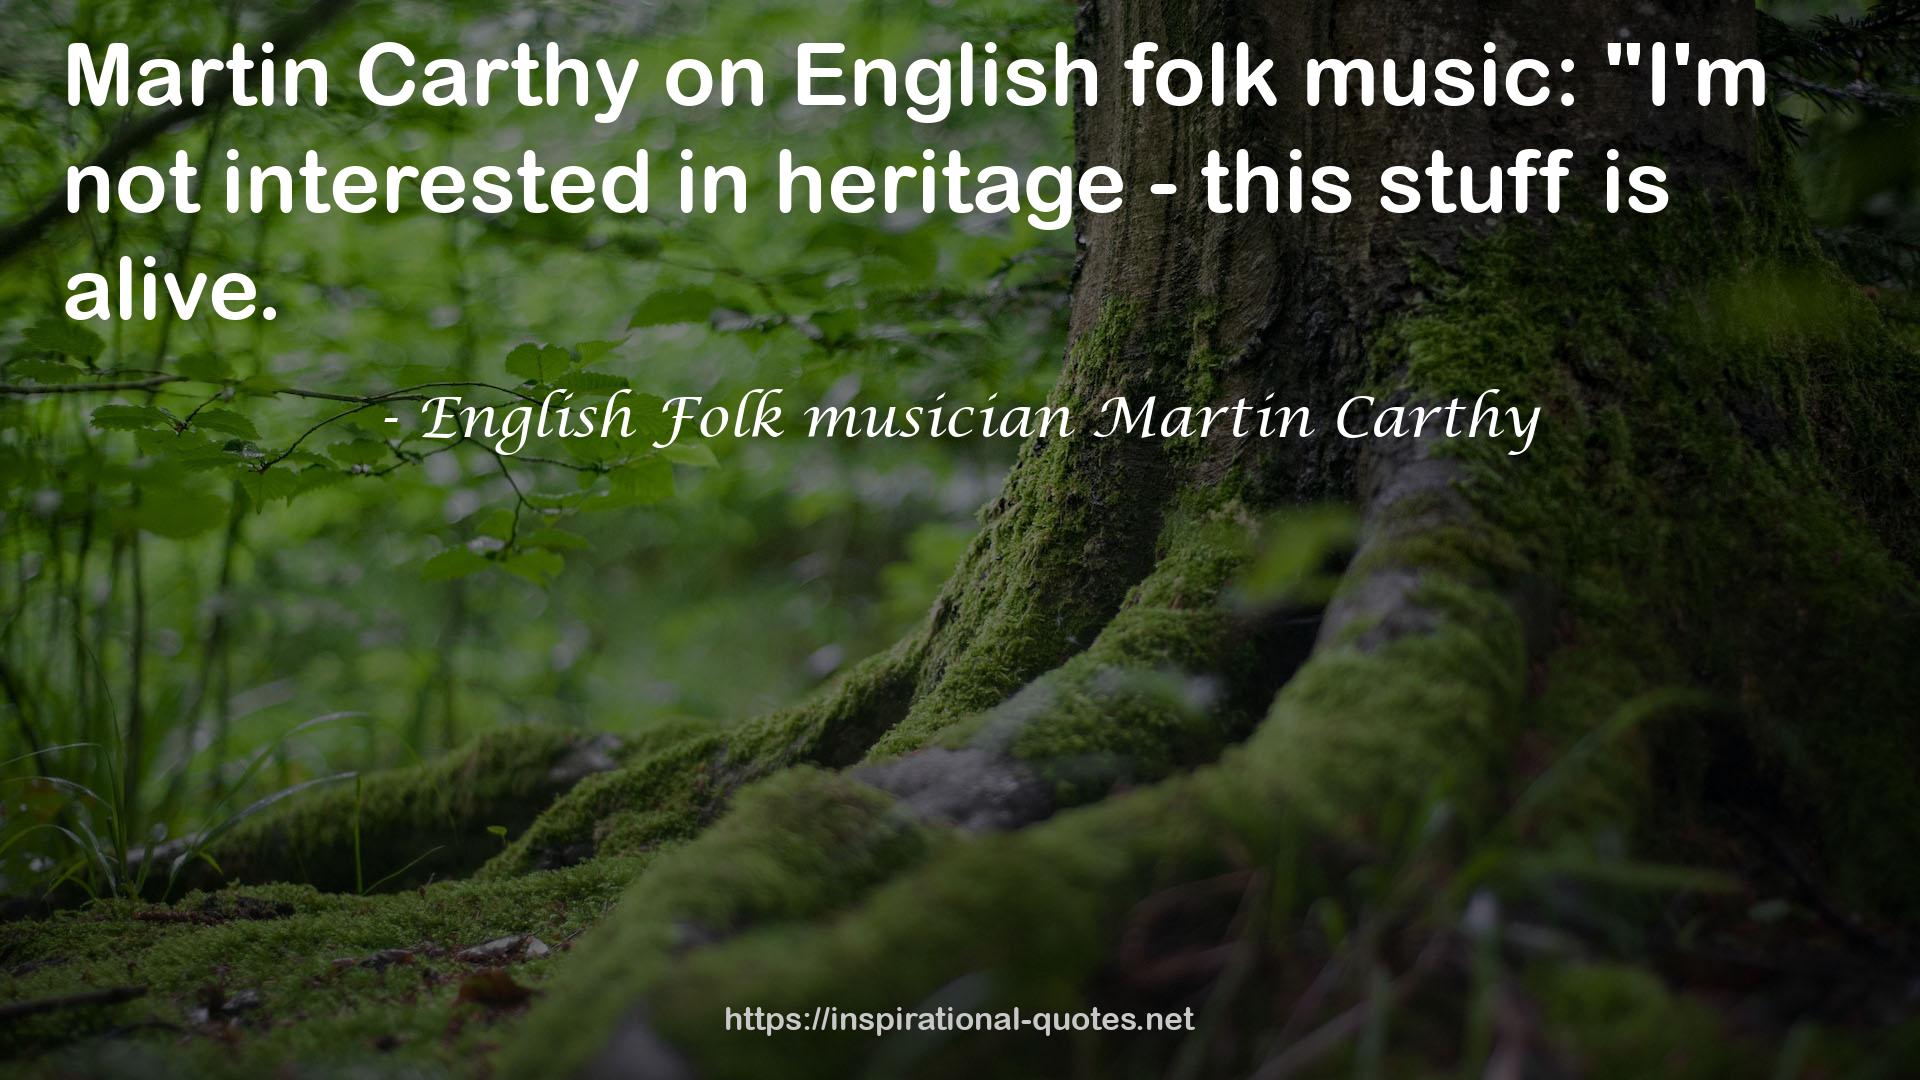 English Folk musician Martin Carthy QUOTES